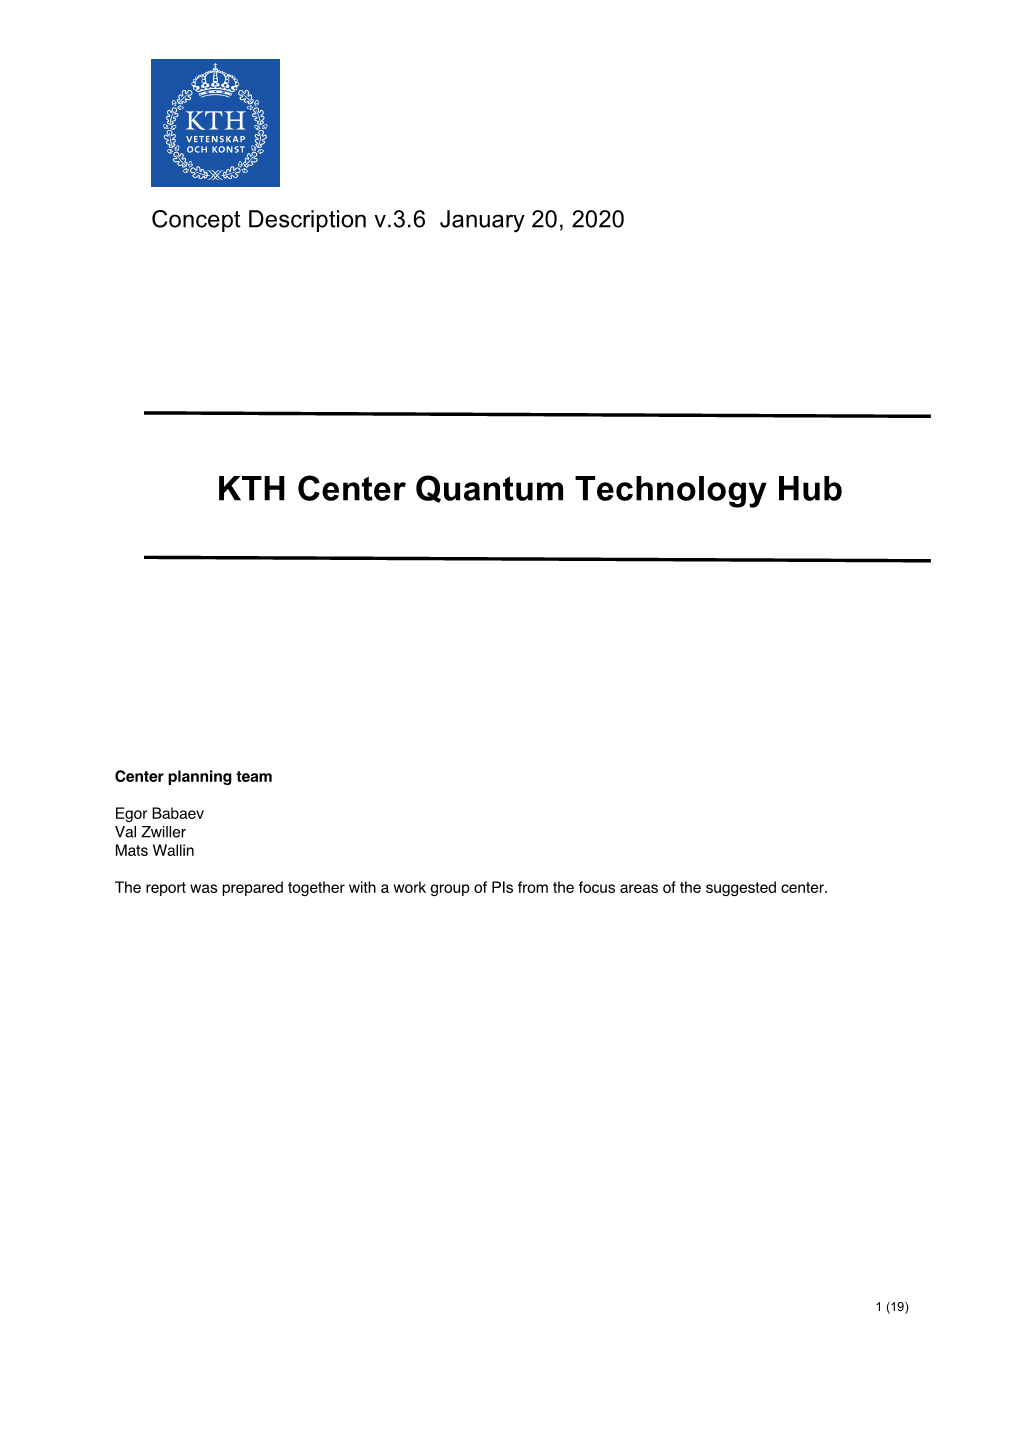 KTH Center Quantum Technology Hub